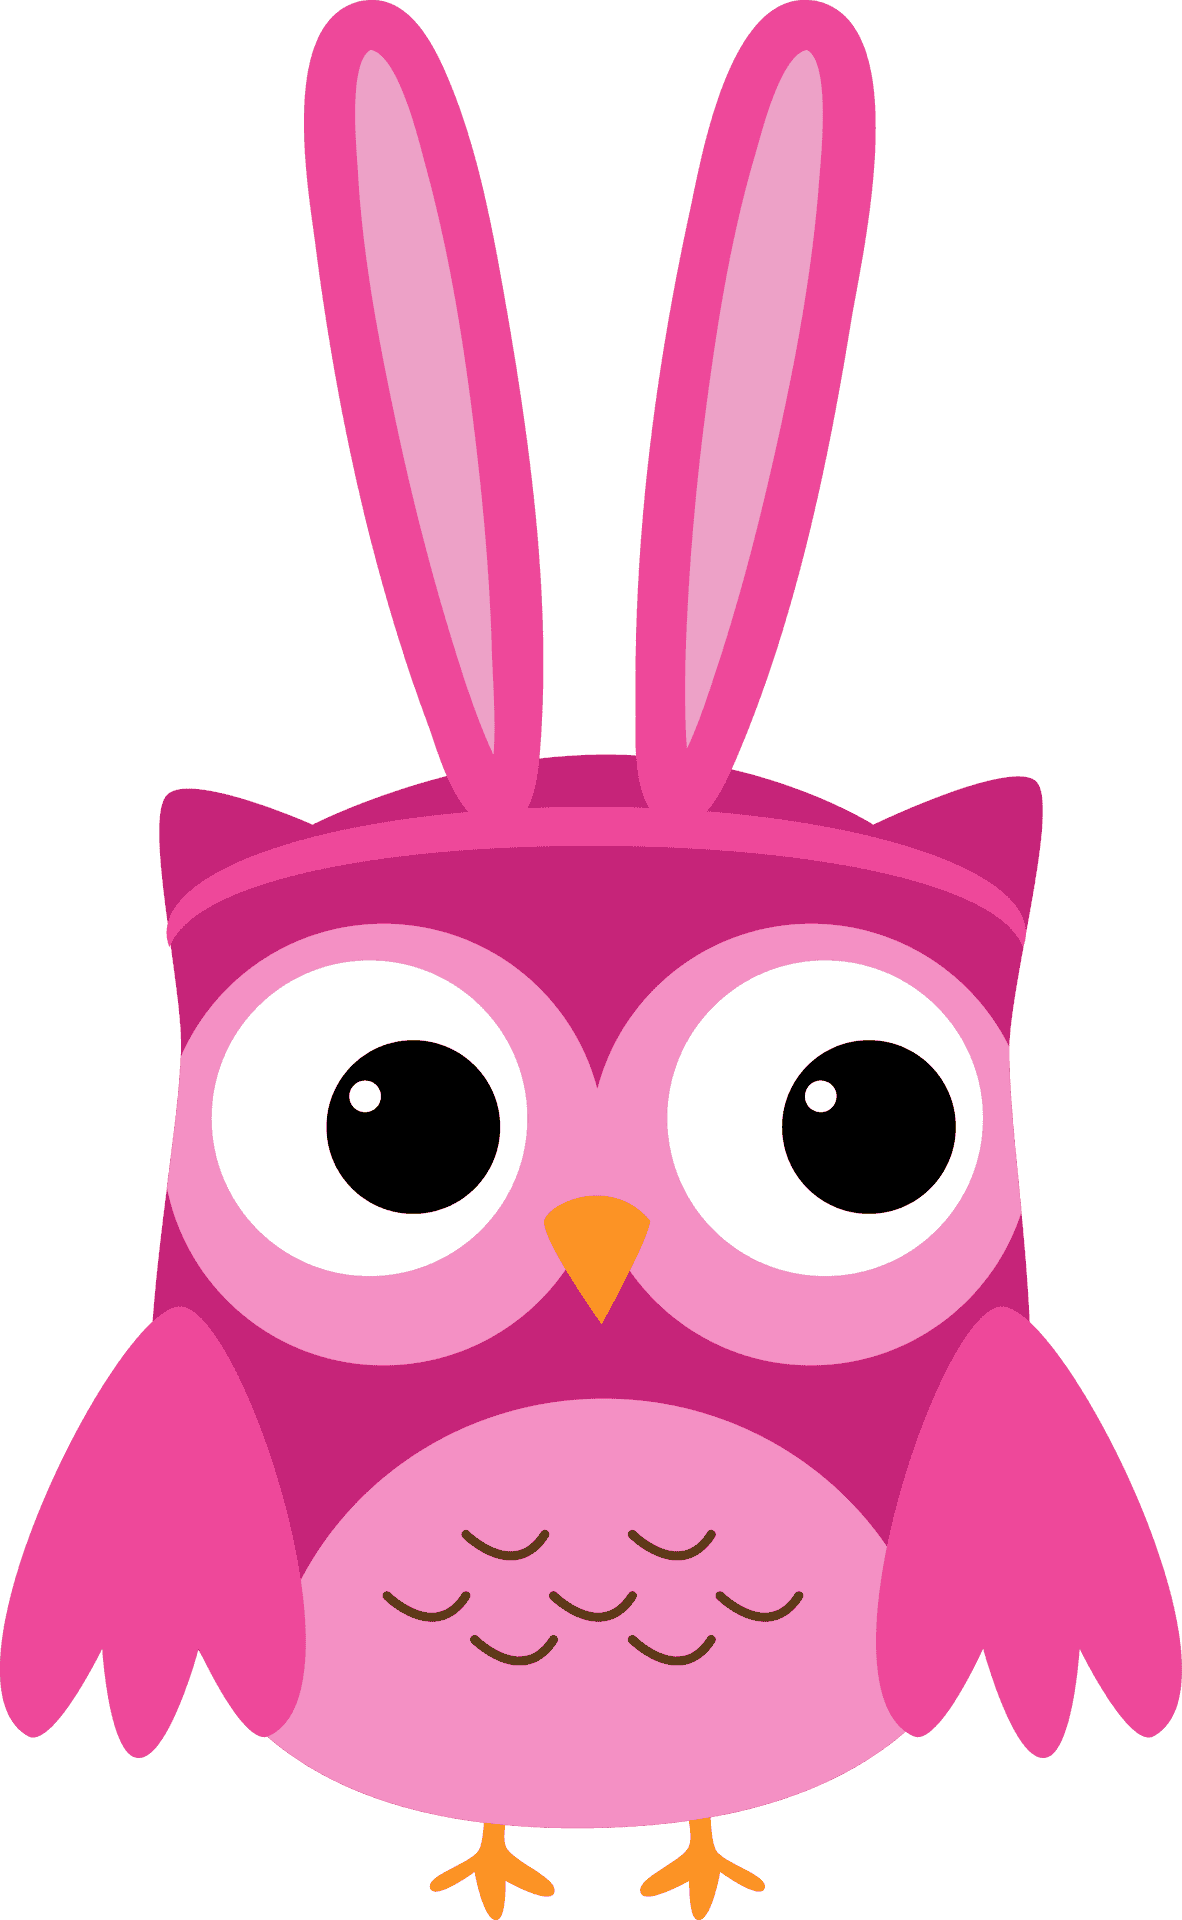 Cartoon Pink Owl Illustration PNG image